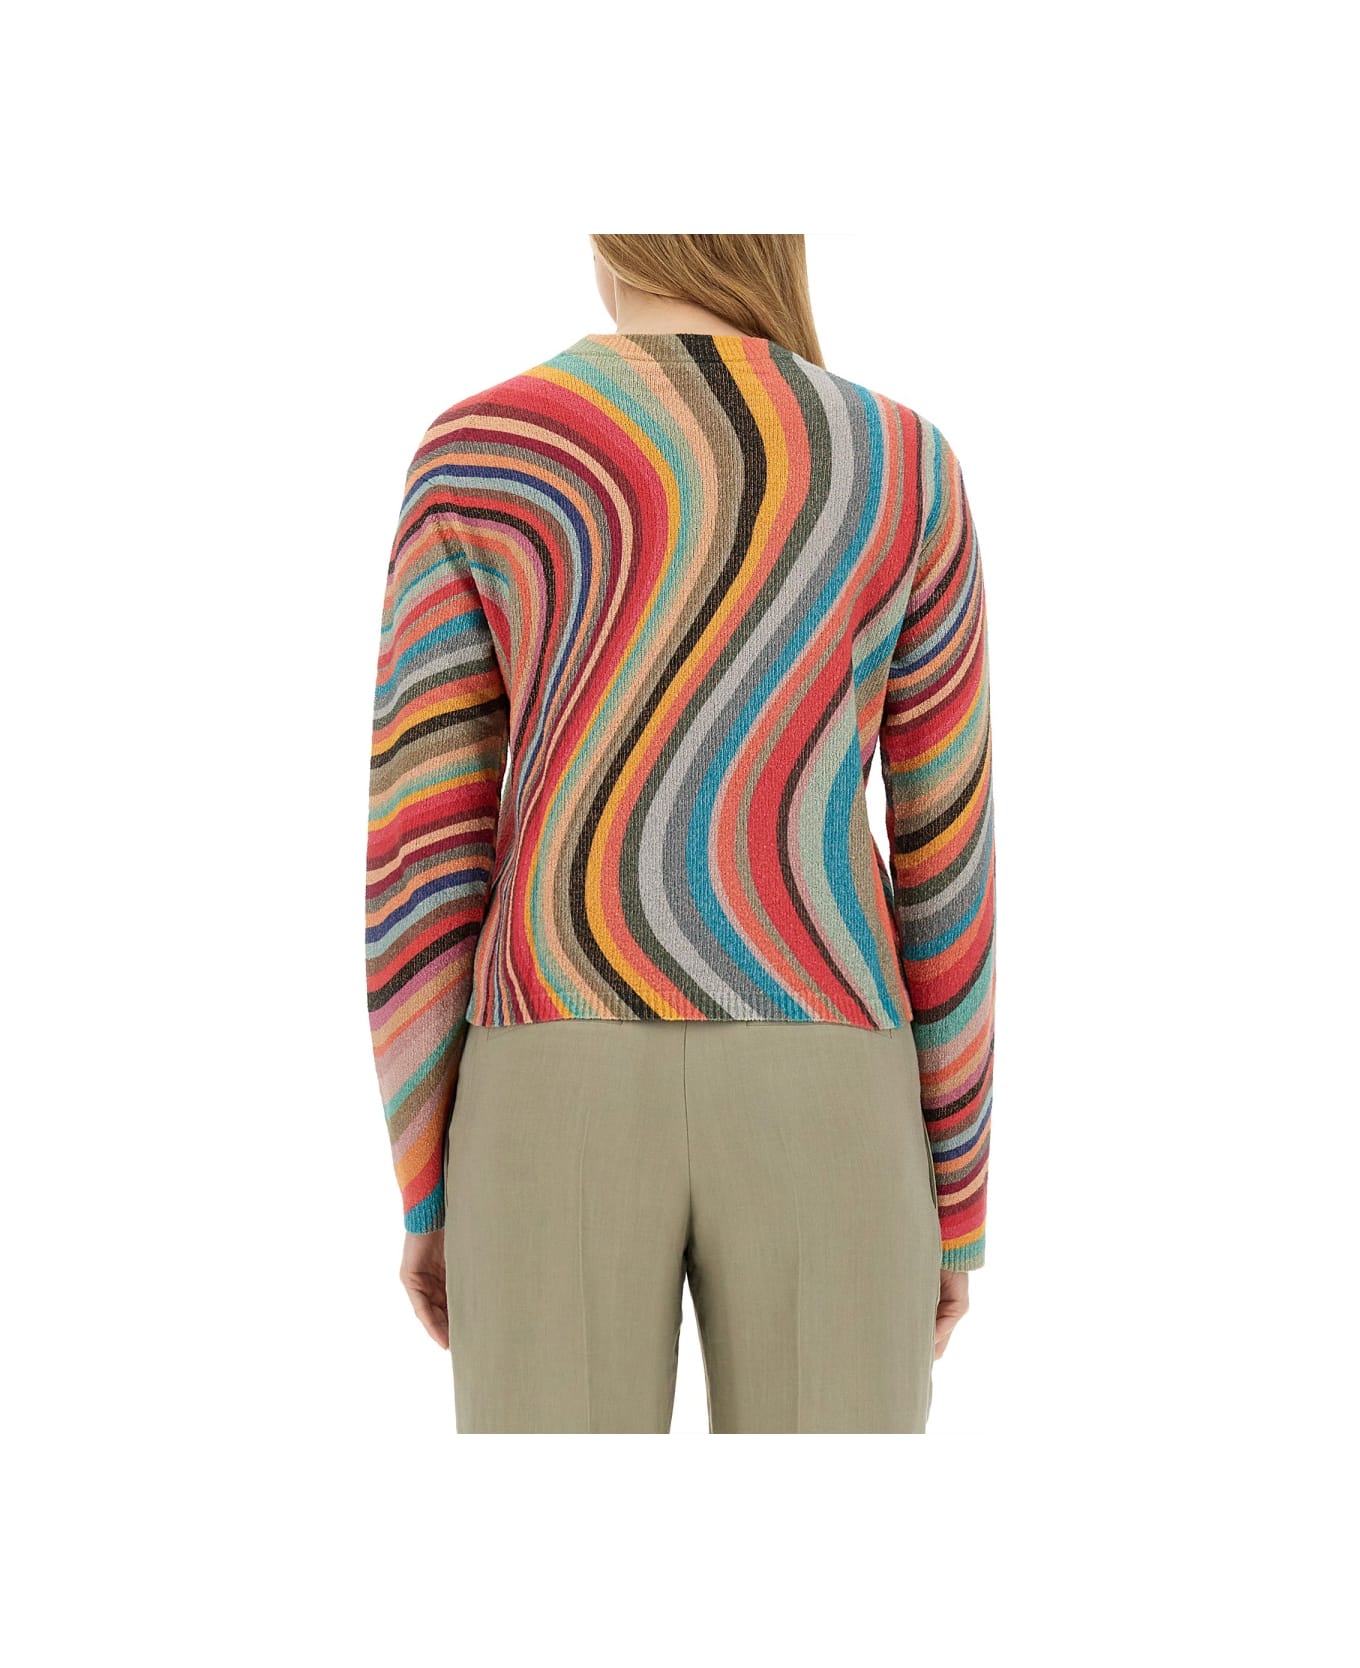 Paul Smith 'swirl' Shirt - Multicolor